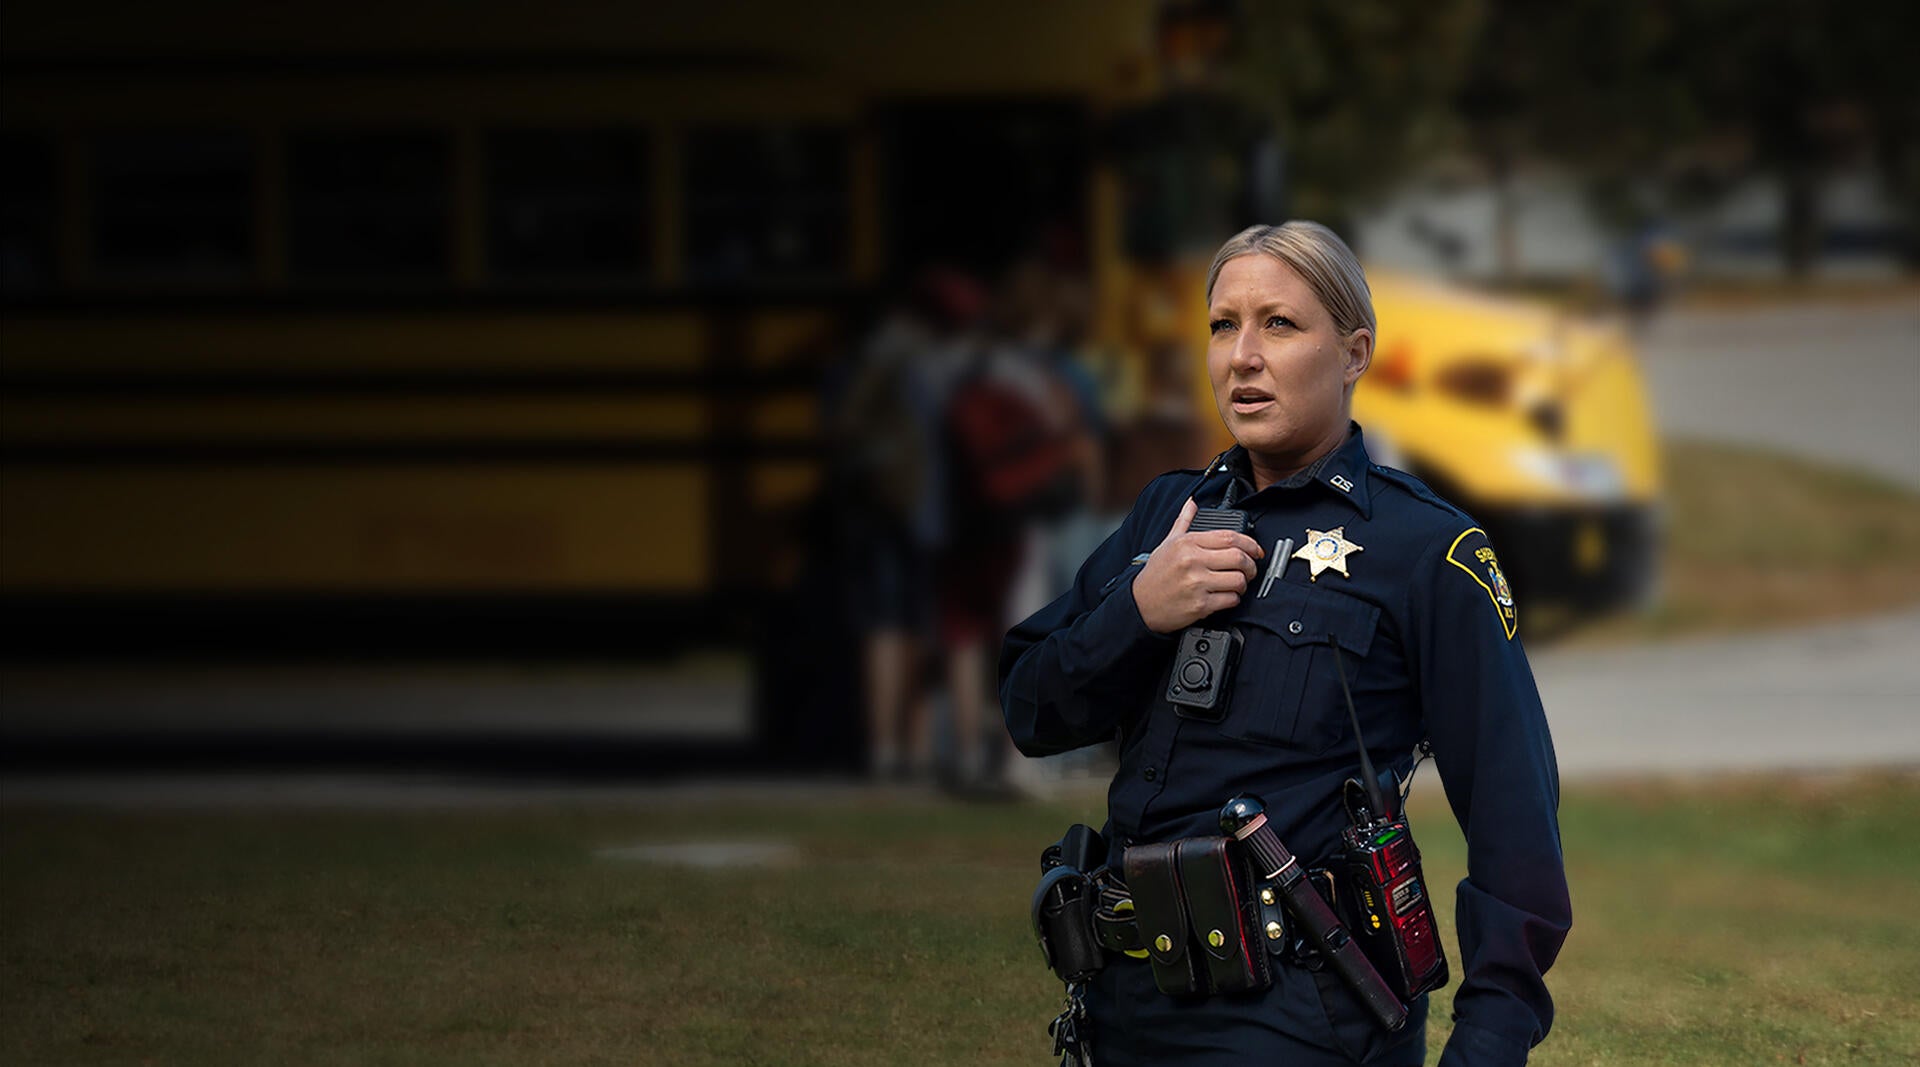 Sheriff with XL Converge radio near school bus